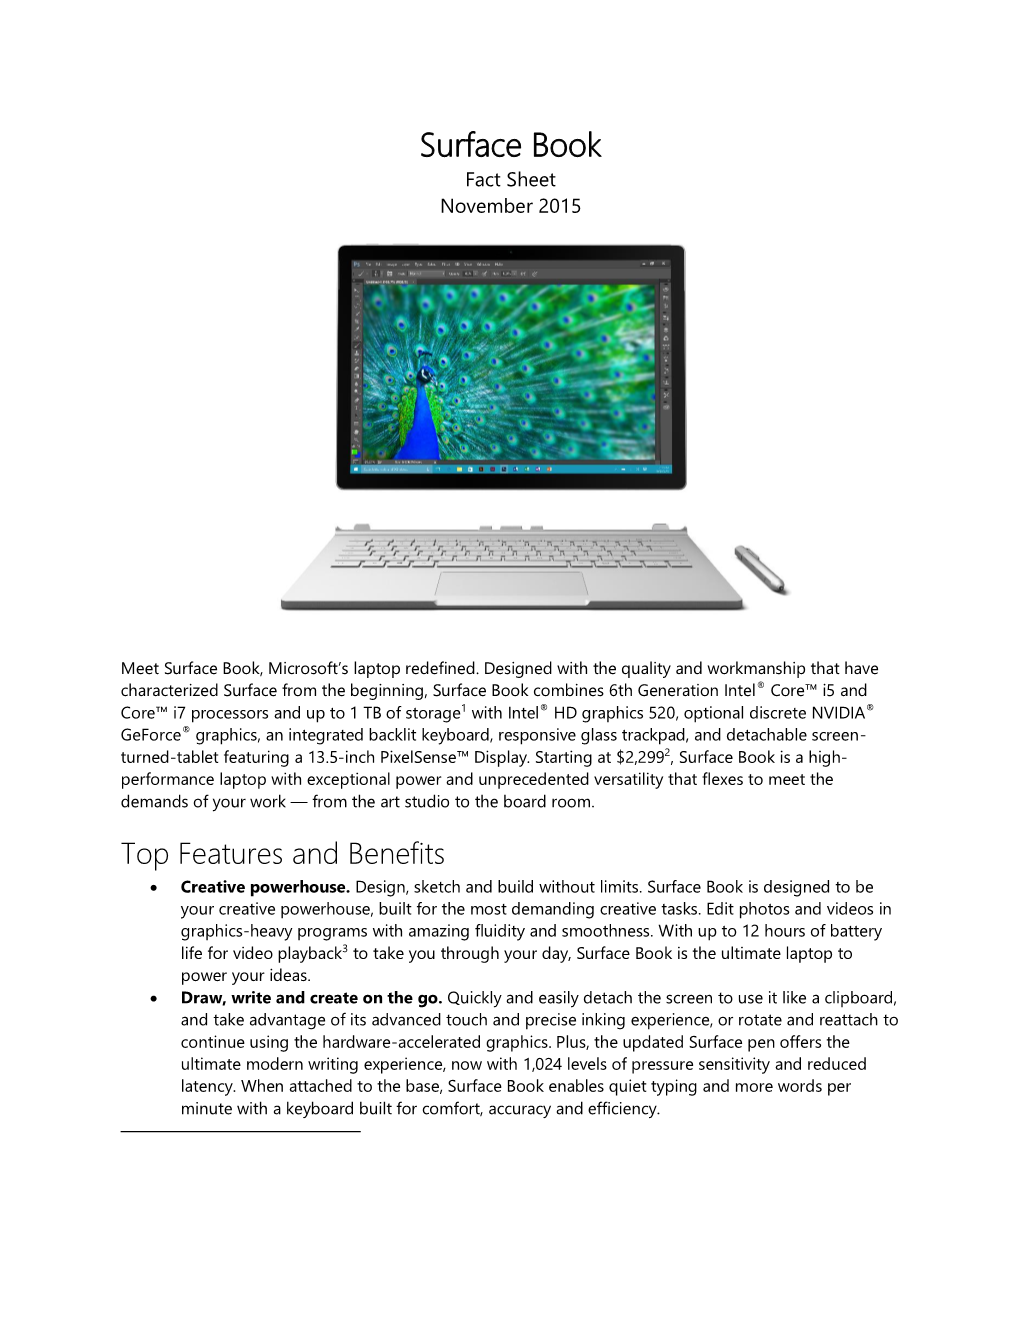 Surface Book Fact Sheet November 2015